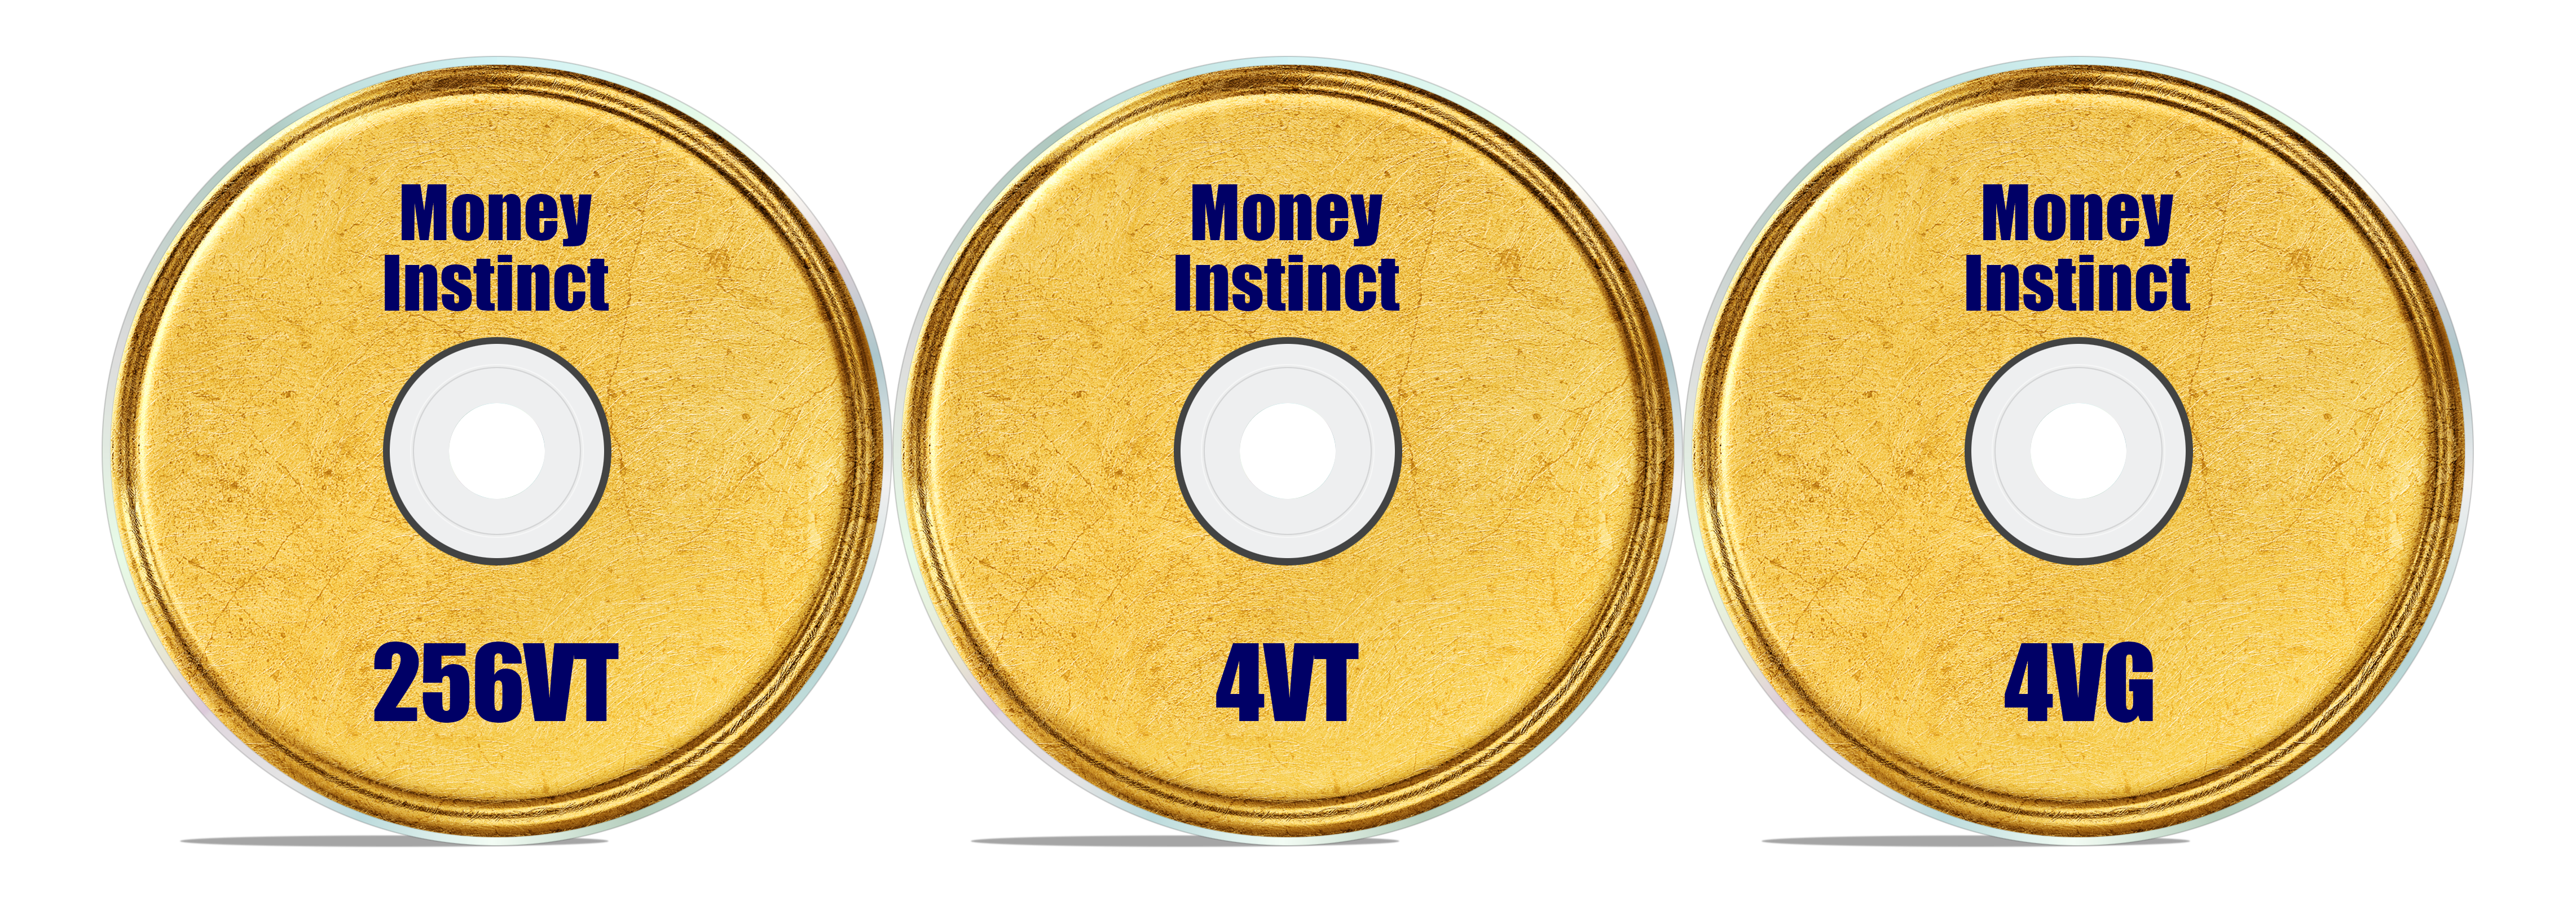 Money Instinct